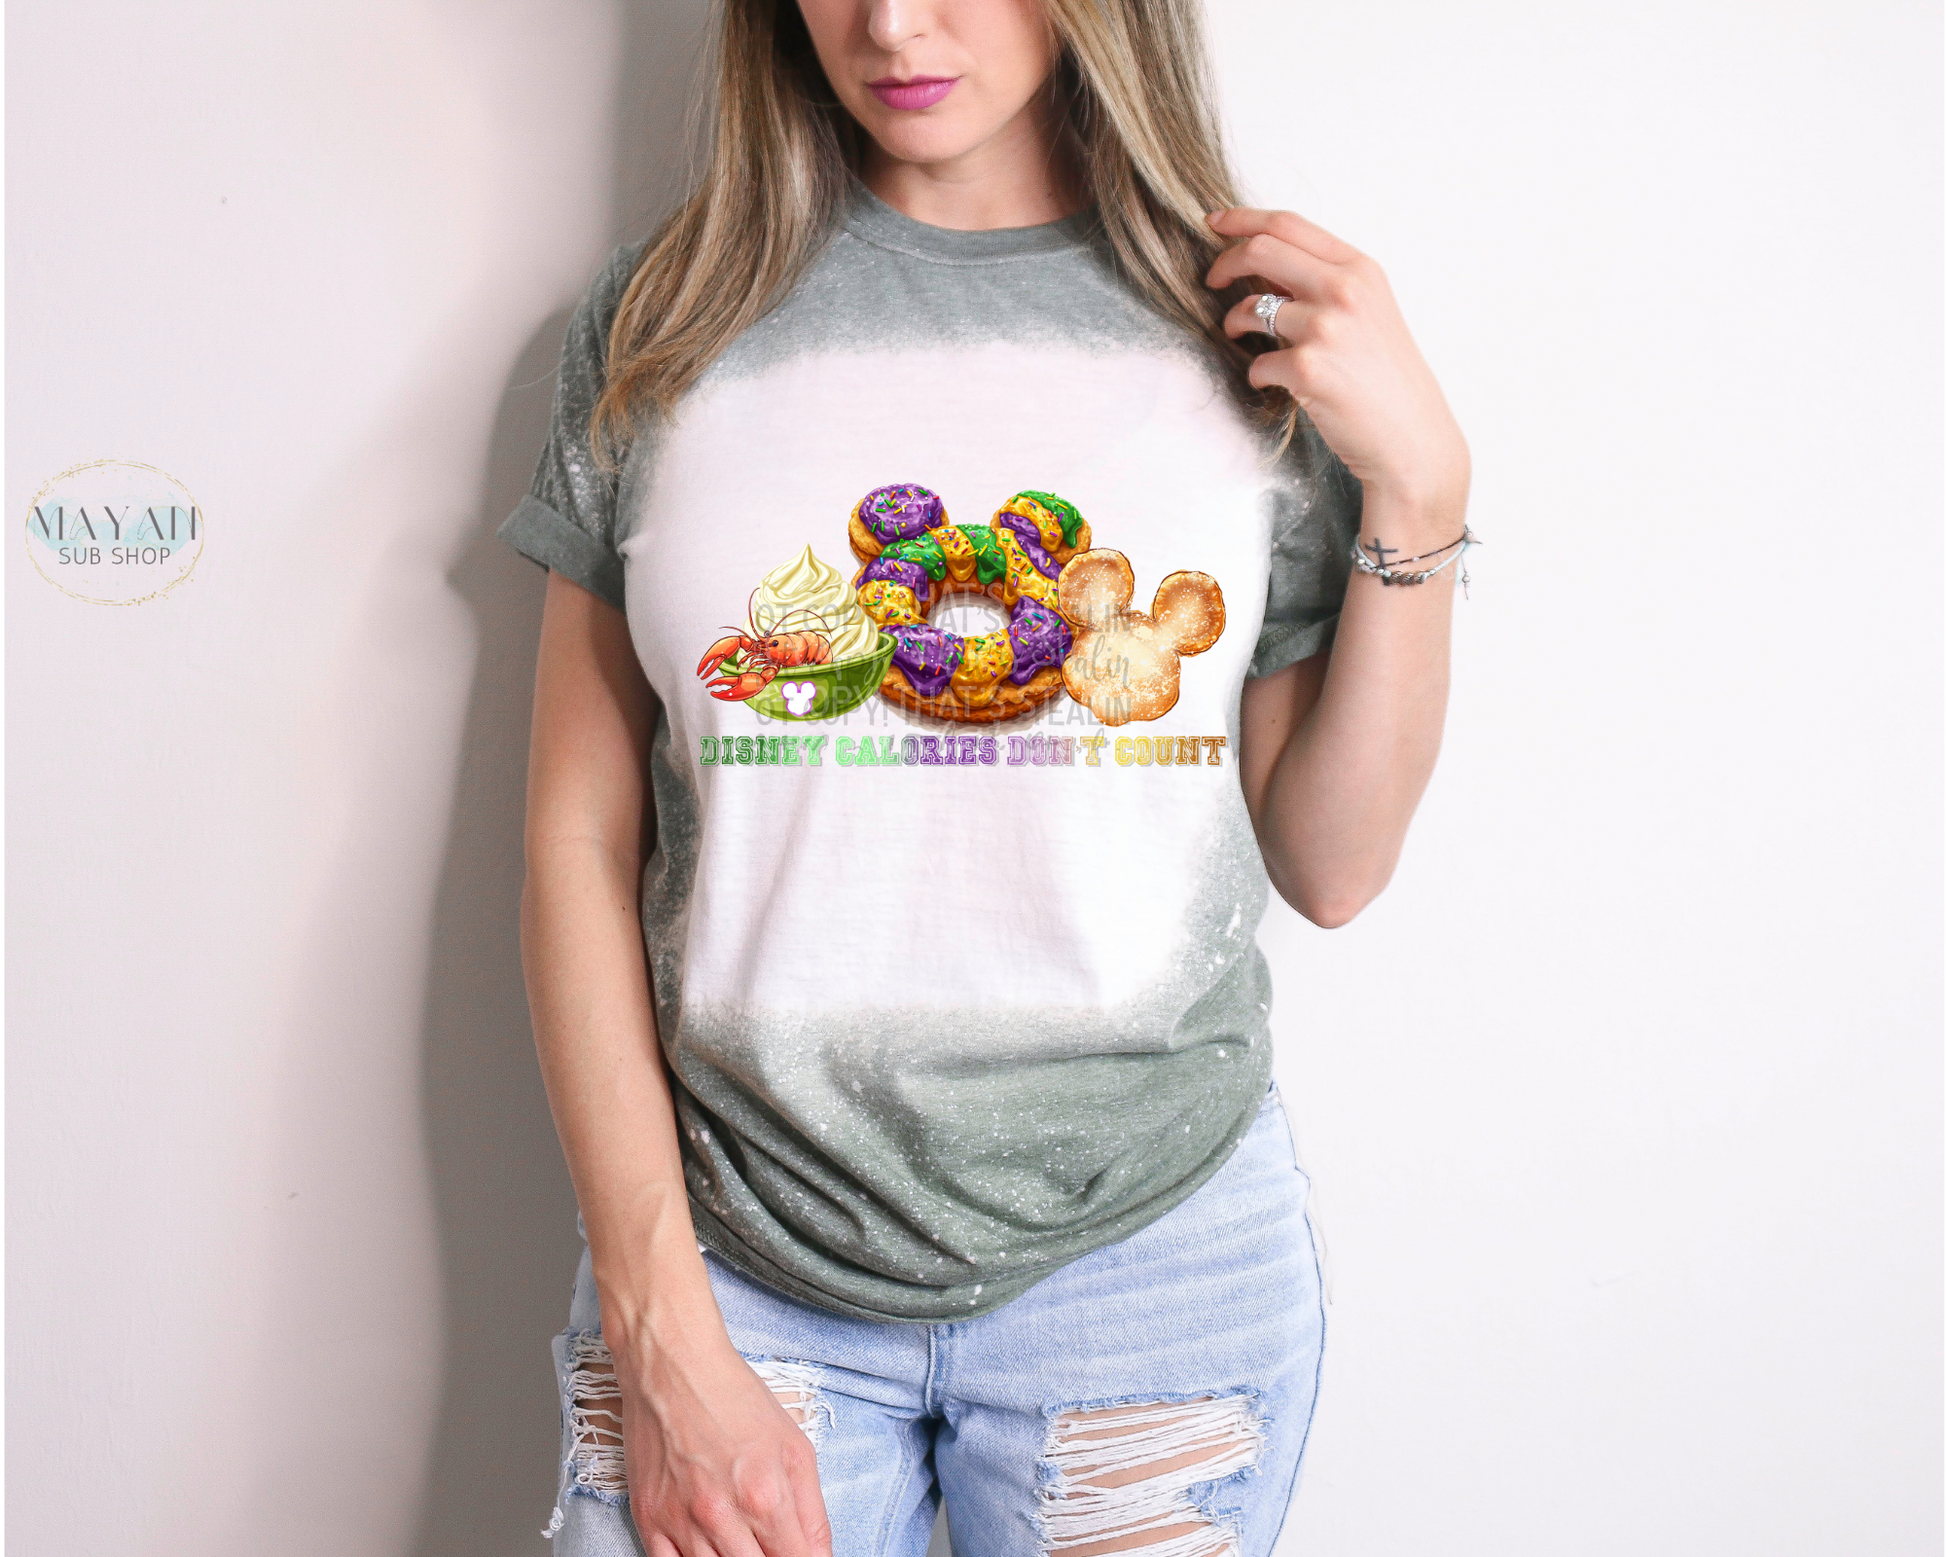 Calories Don't Count Bleached Shirt - Mayan Sub Shop